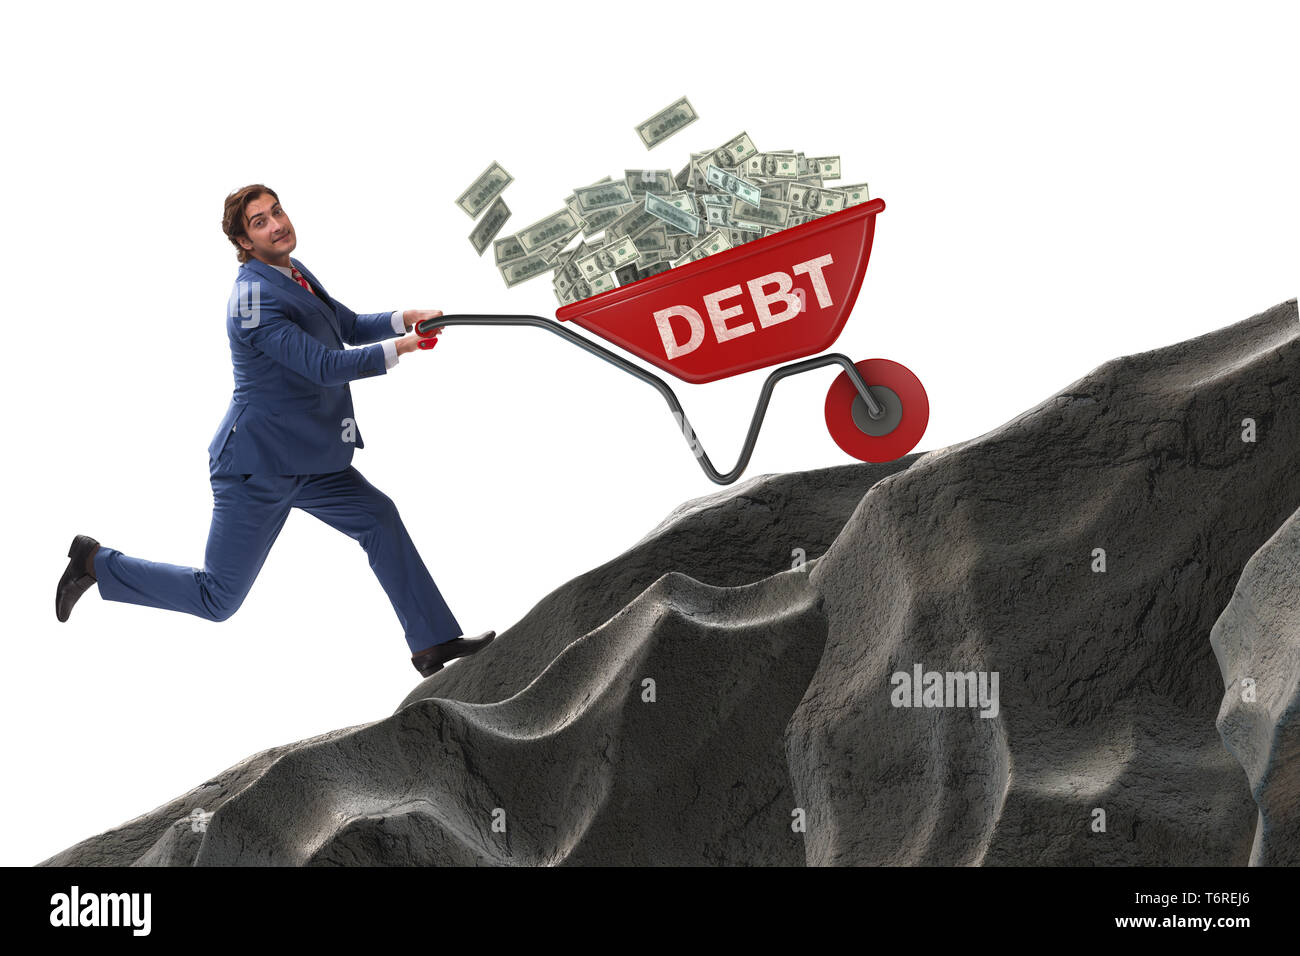 Businessman pushing wheelbarrow uphill in debt loan concept Stock Photo